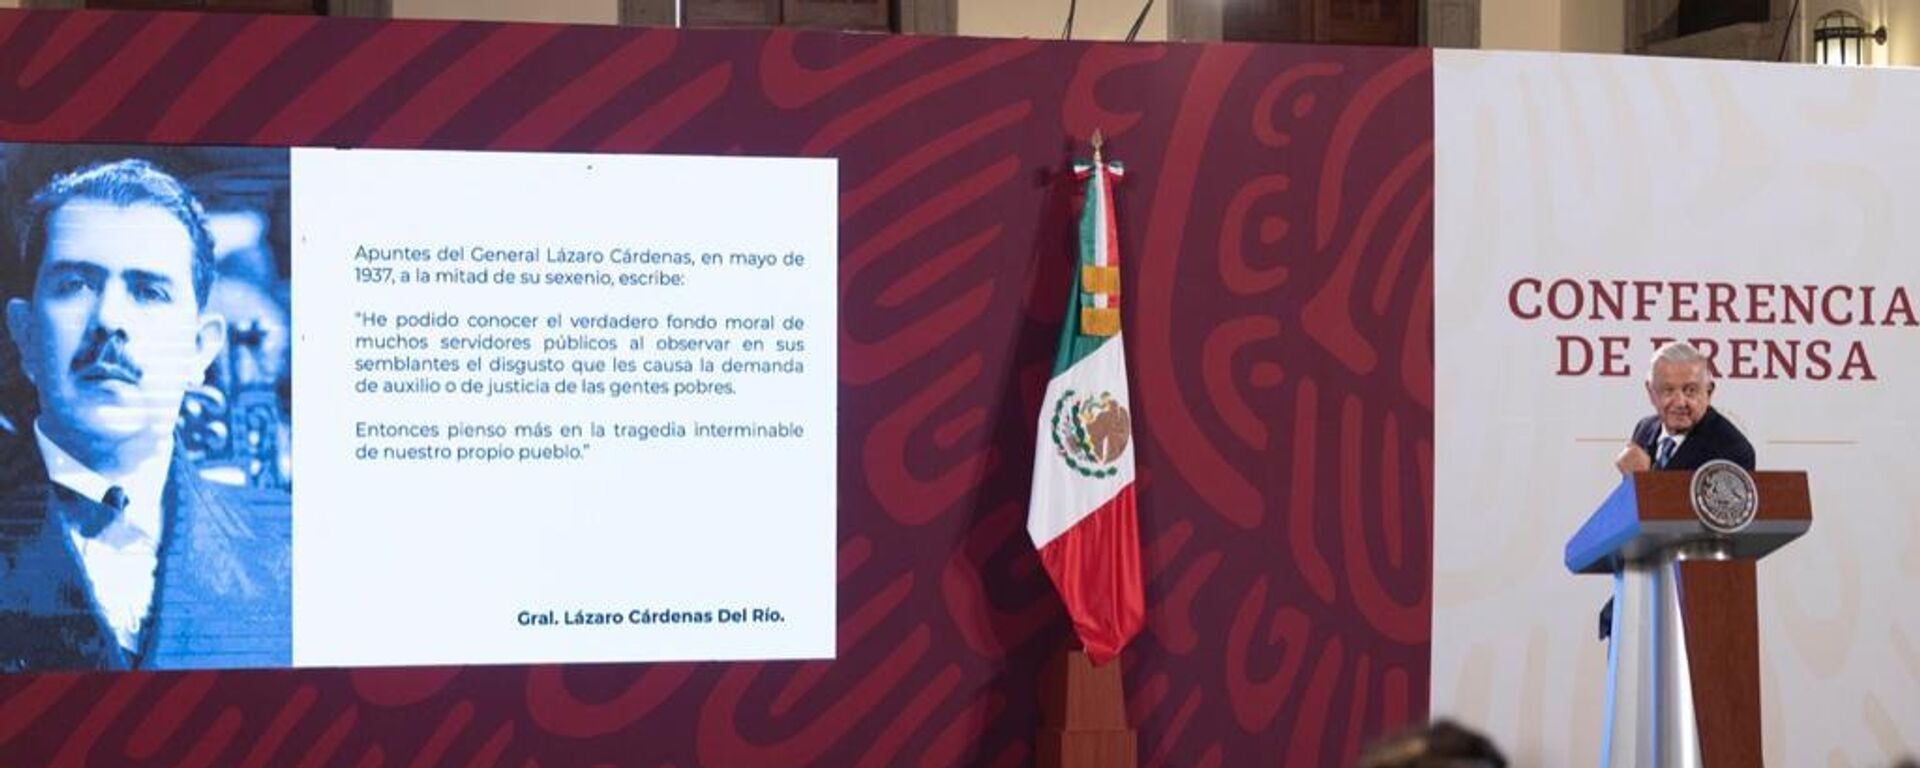 El presidente de México, Andrés Manuel López Obrador, cita a Lázaro Cárdenas. - Sputnik Mundo, 1920, 28.07.2022